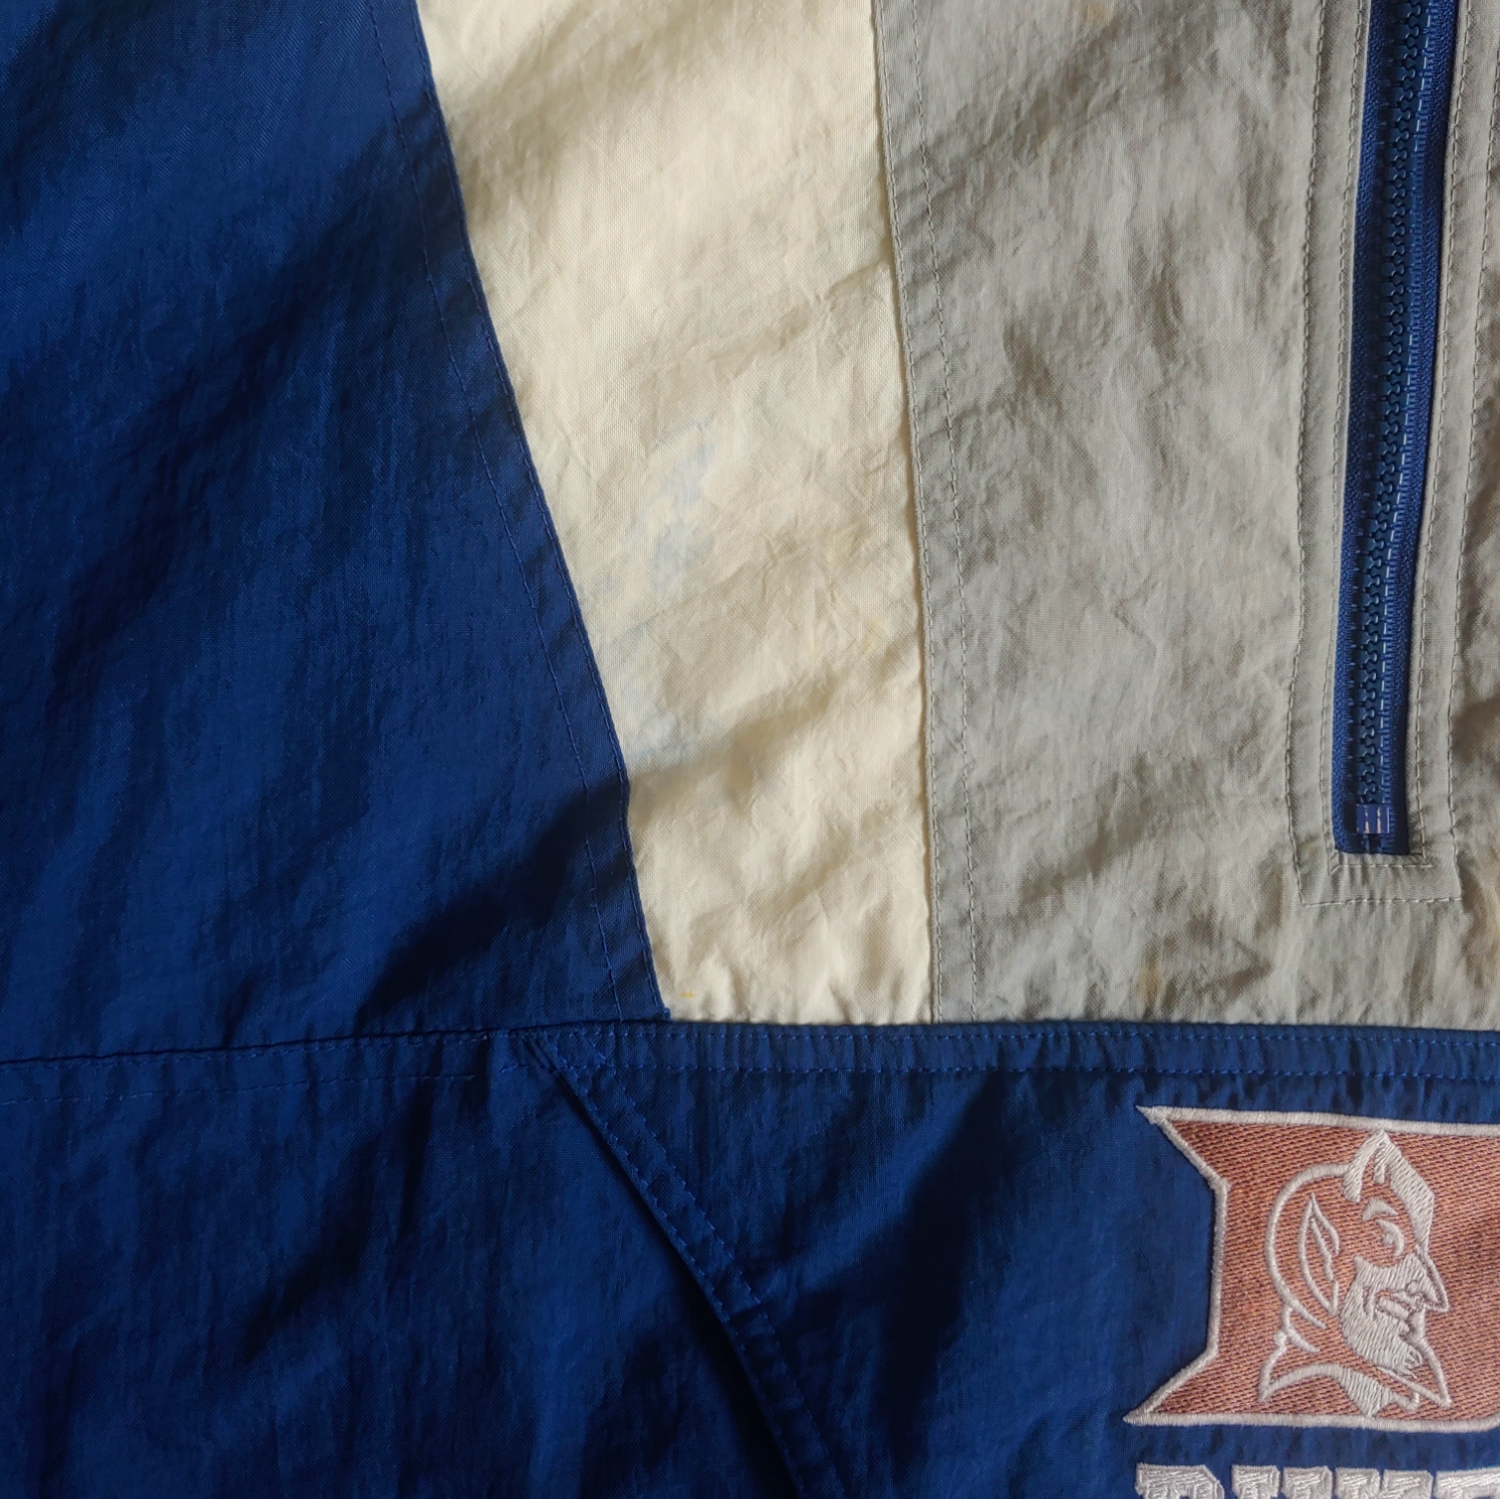 Vintage 90s Starter NCAA Duke Blue Devils Jacket With Back Spell Out Marks - Casspios Dream